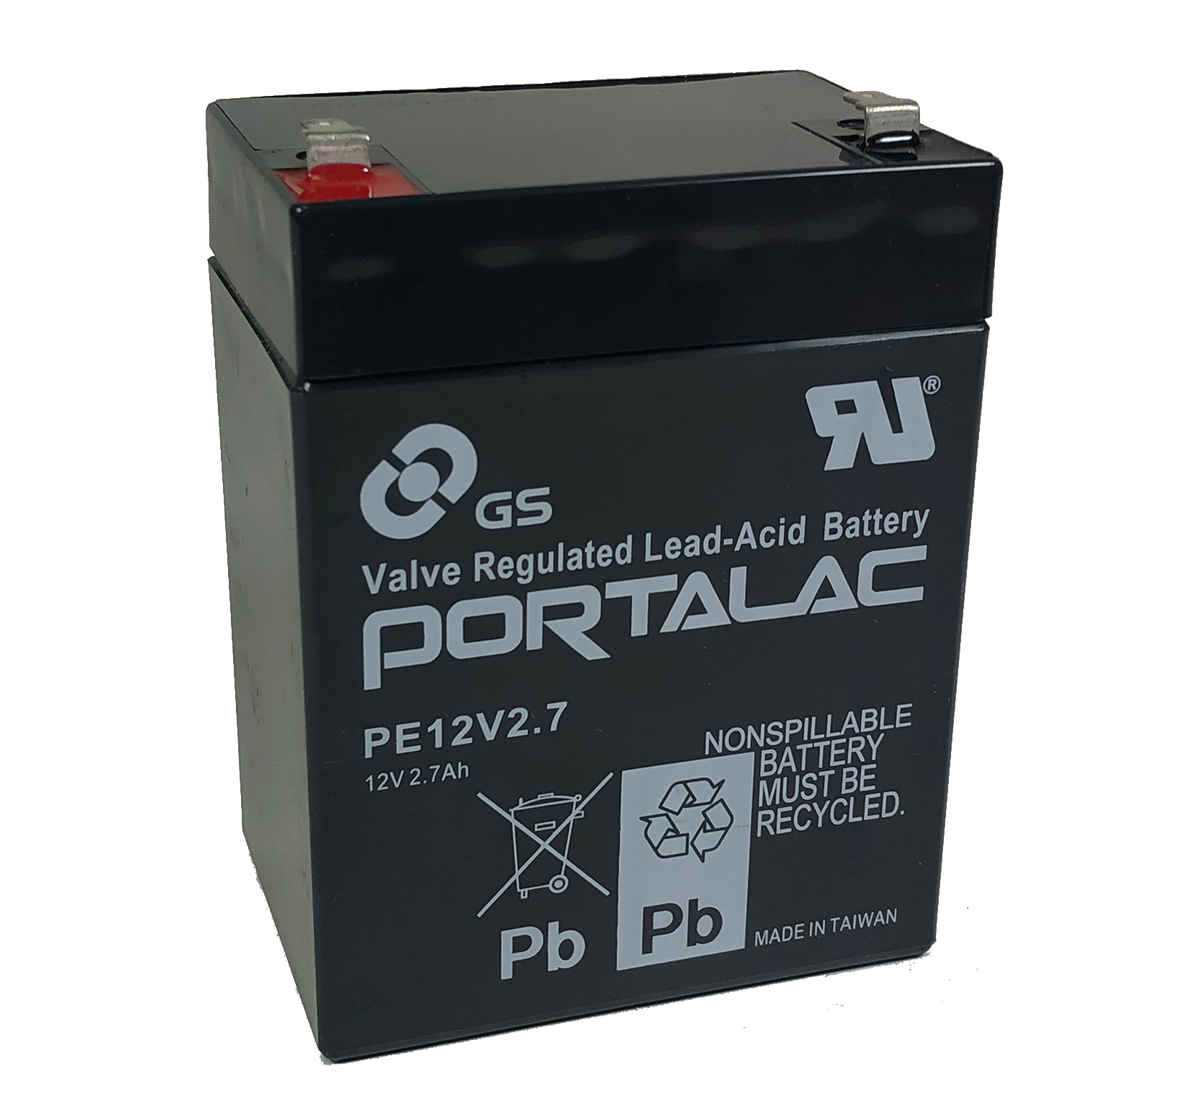 Portalac PE12-2.7 12V 2.7Ah Lead Acid Battery